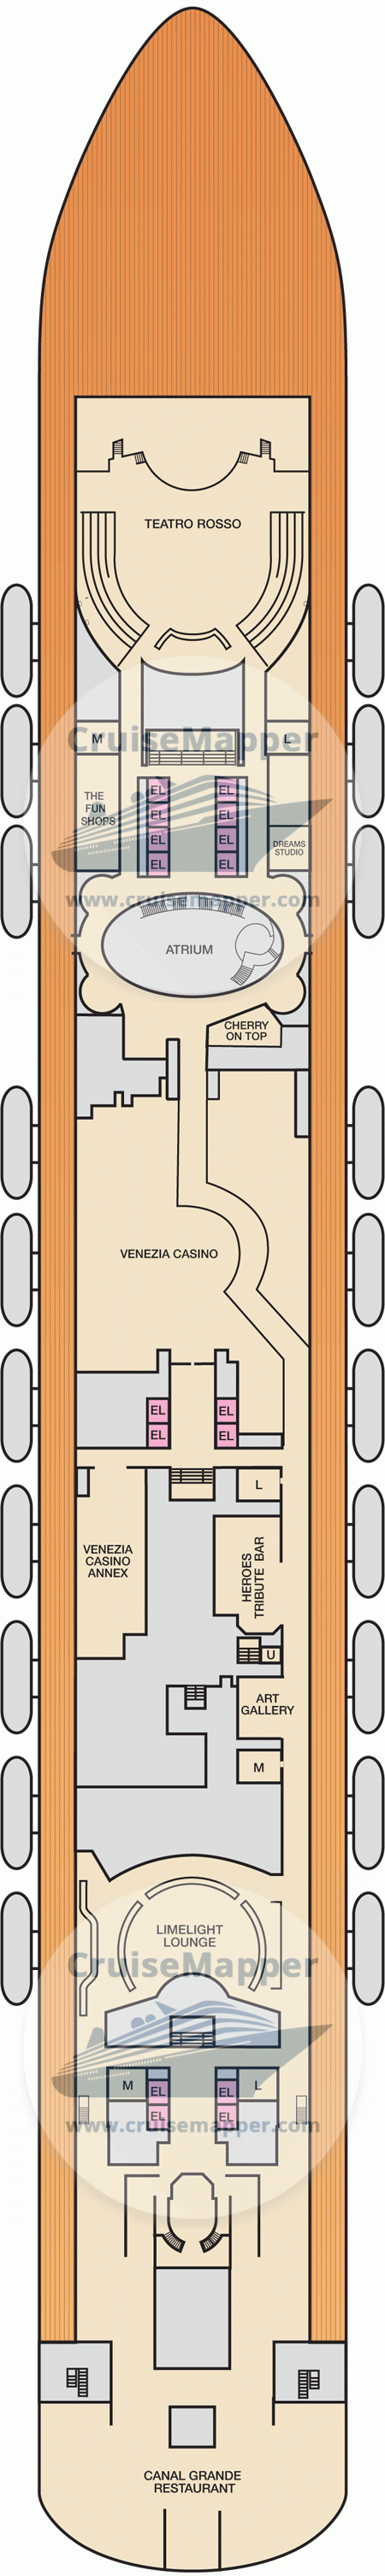 Costa Venezia Deck 04 - Casino-Shops